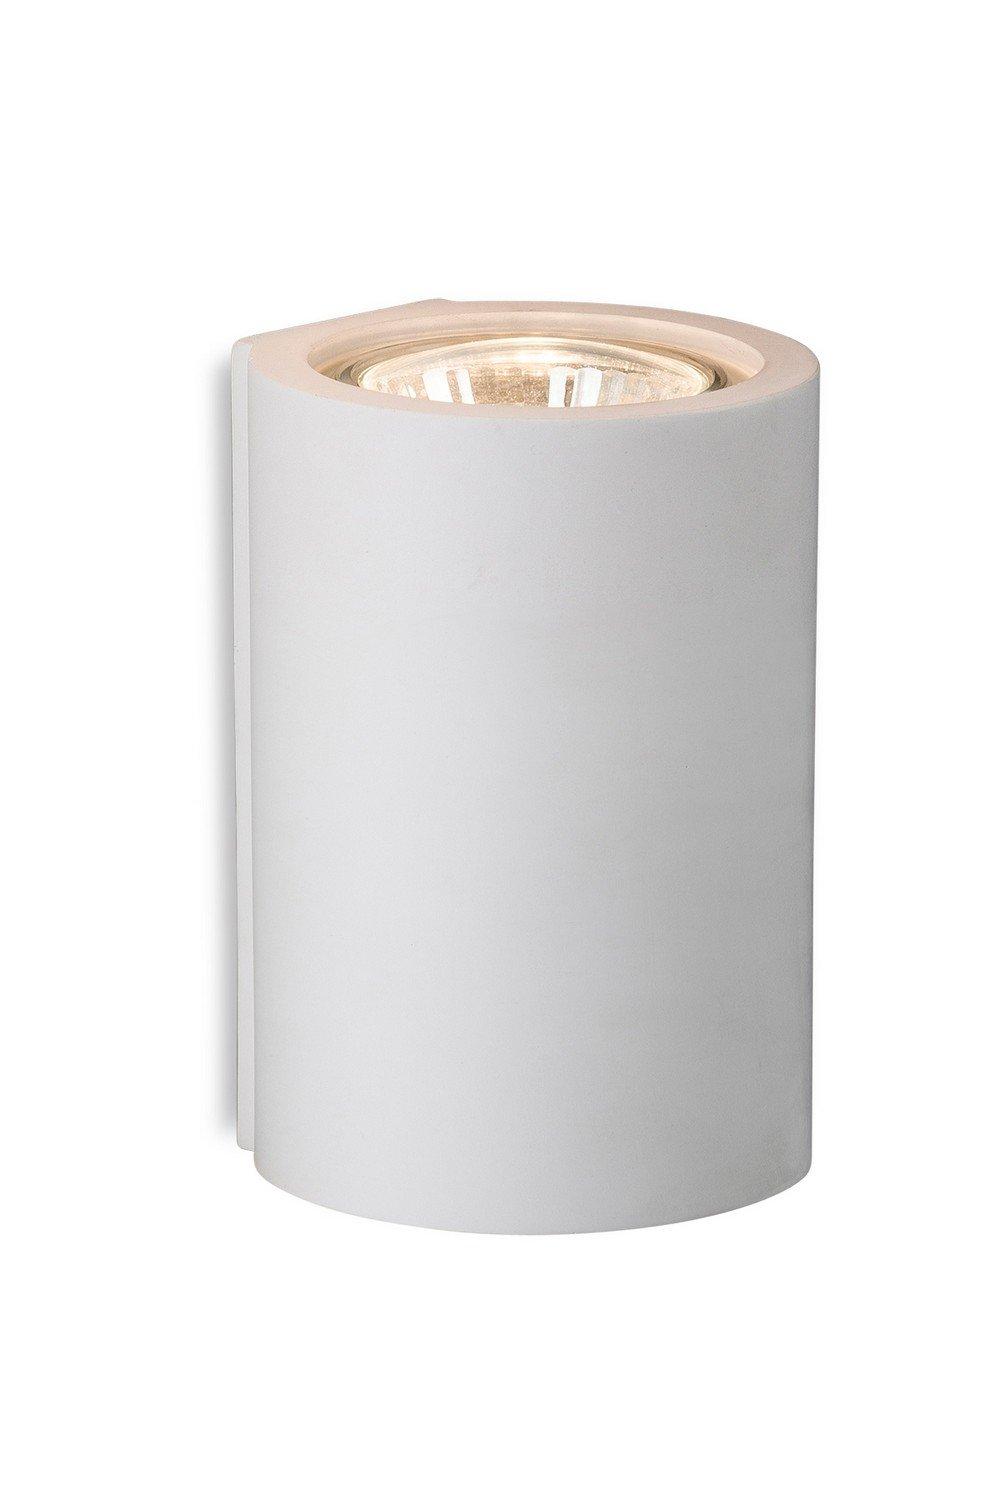 Wells 1 Light Single Plaster Indoor Wall Light White GU10